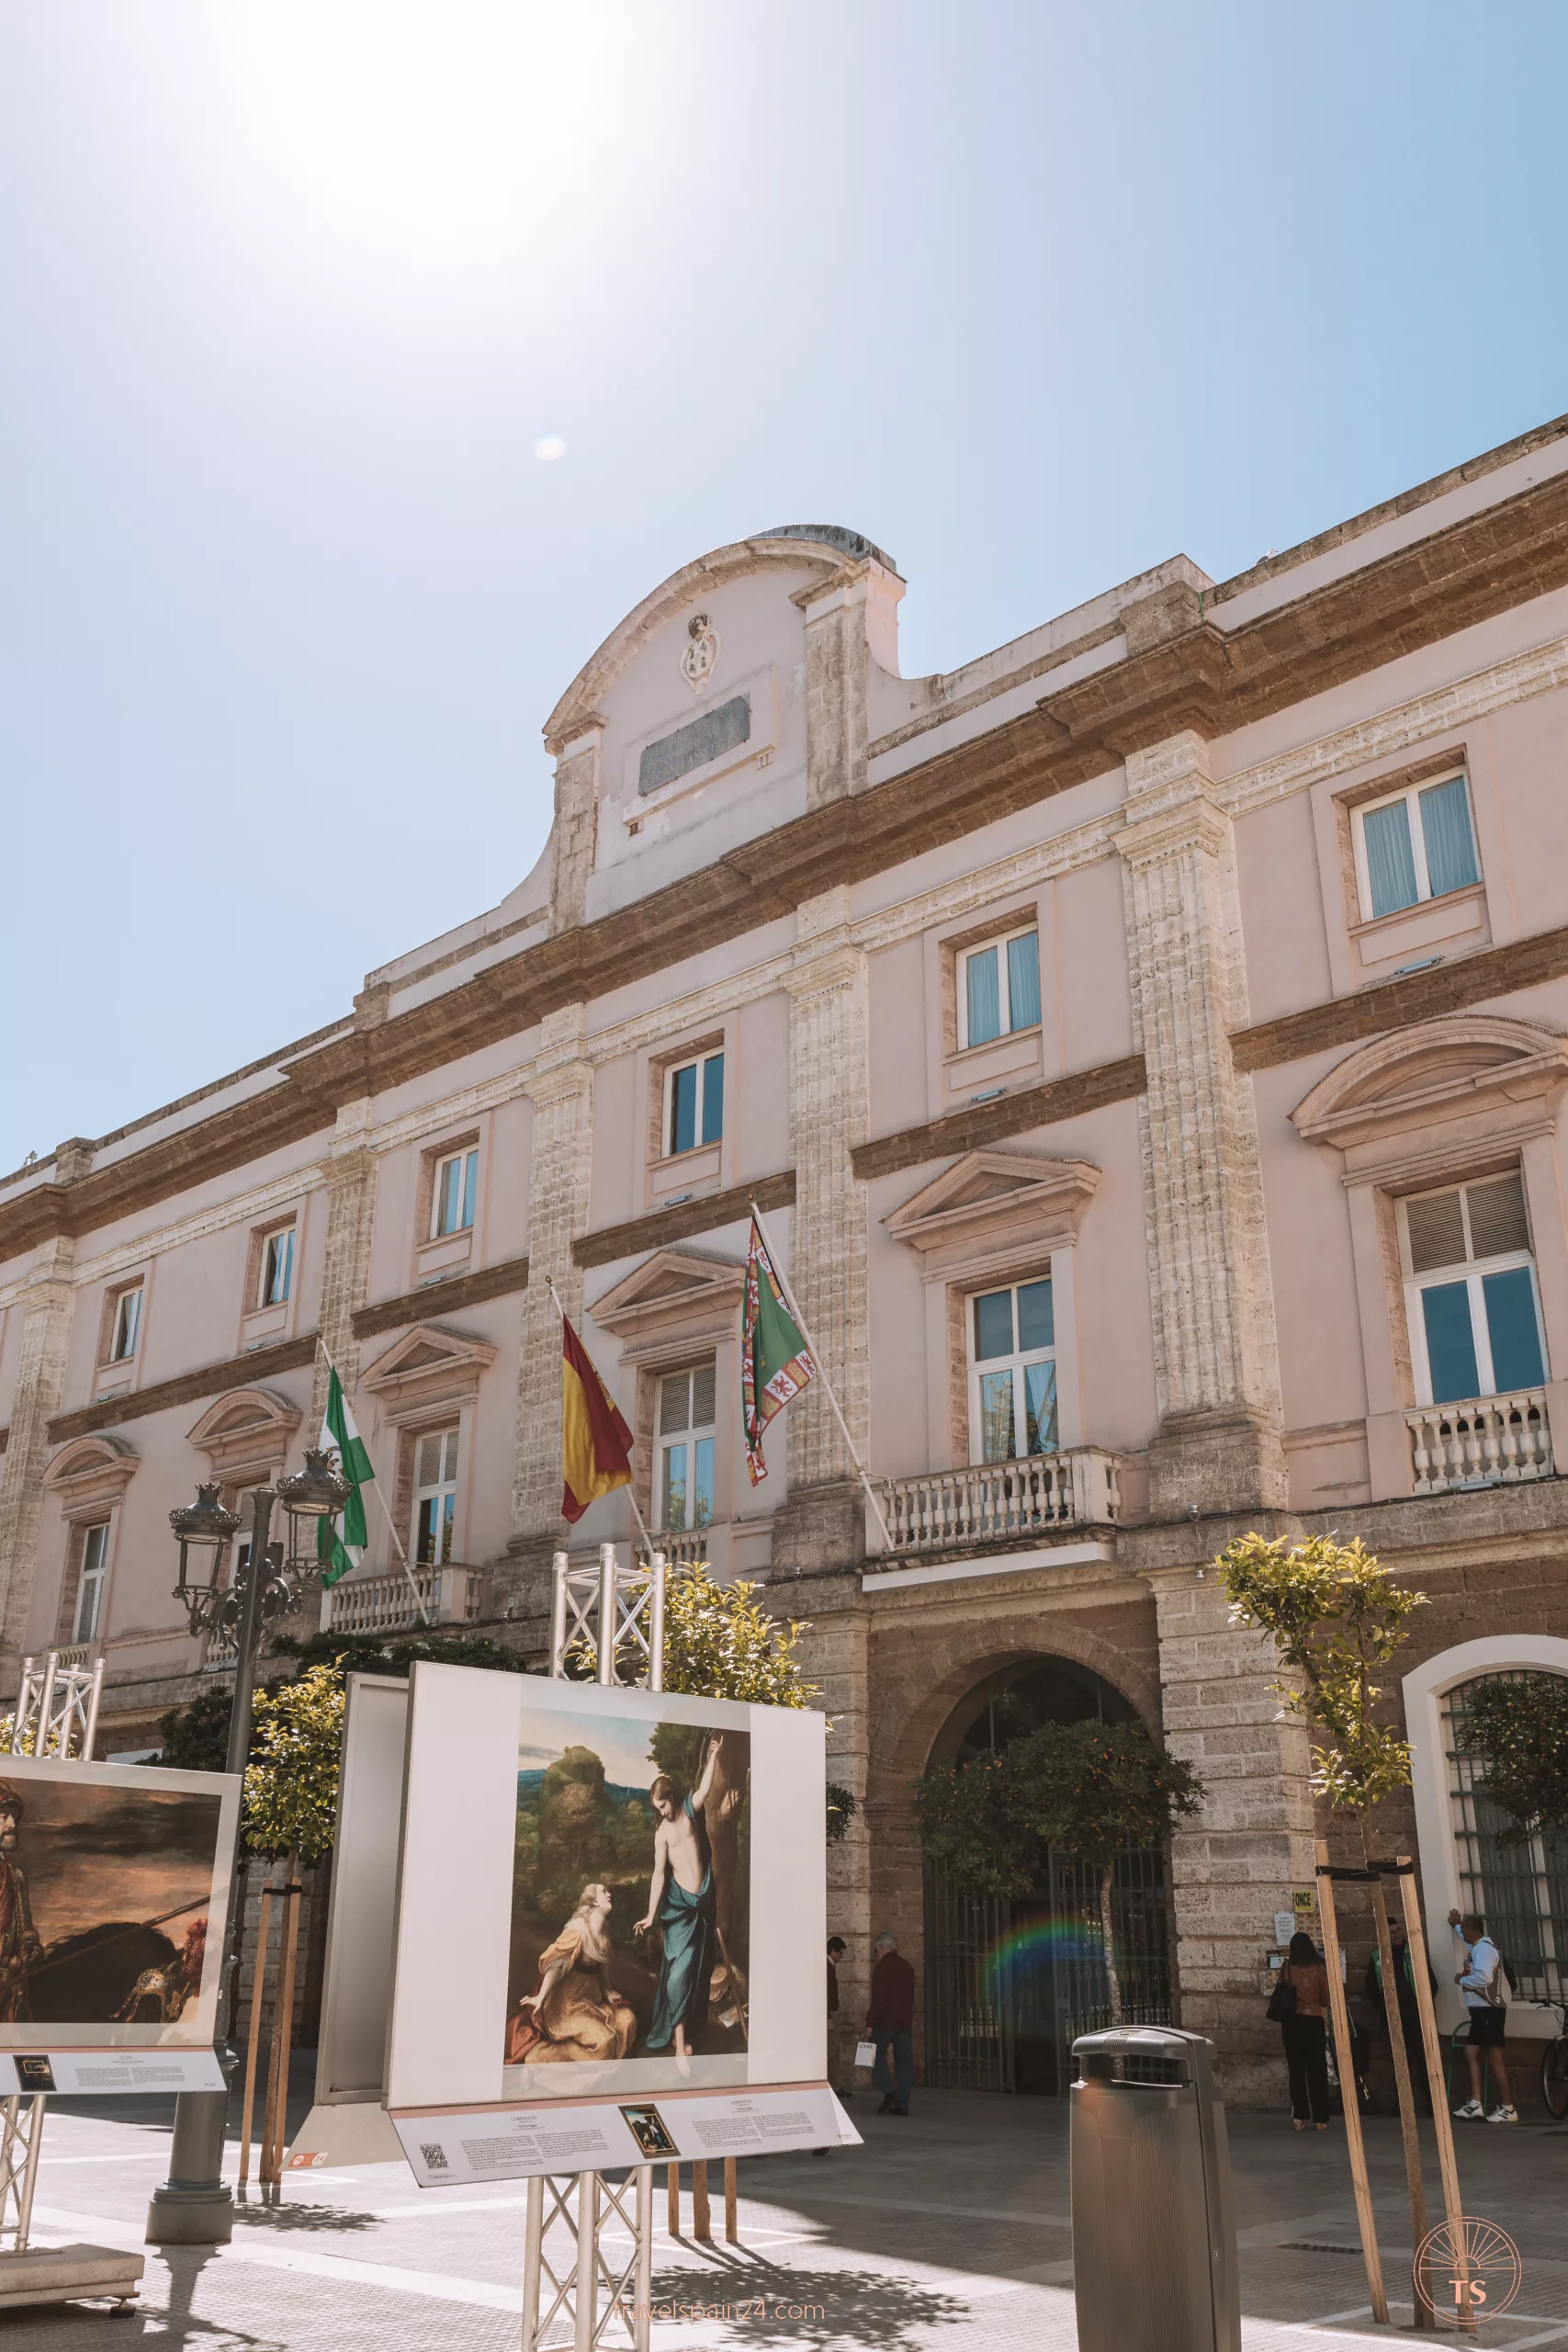 Facade of Diputación Provincial de Cádiz, with a visible art exhibition from the Prado Museum. This site is one of the Cadiz highlights, blending governmental architecture with cultural enrichment through art.
